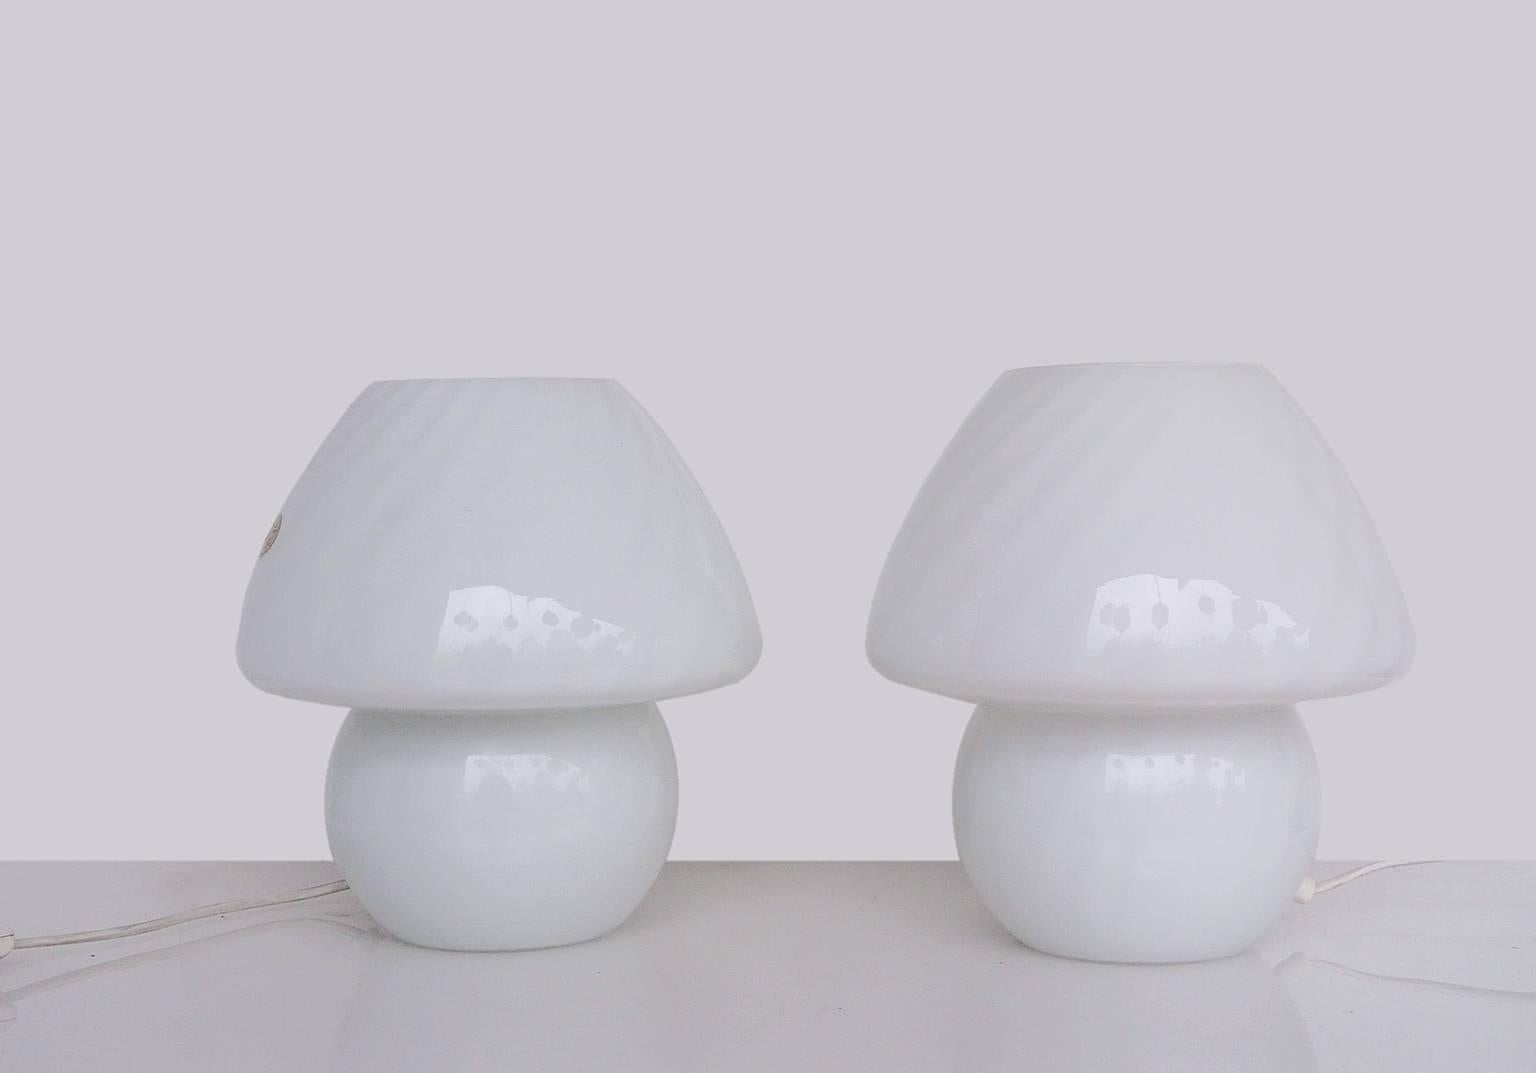 Pair of handblown glass mushroom table lamps.
Each lamp takes one large Edison base bulb.
 